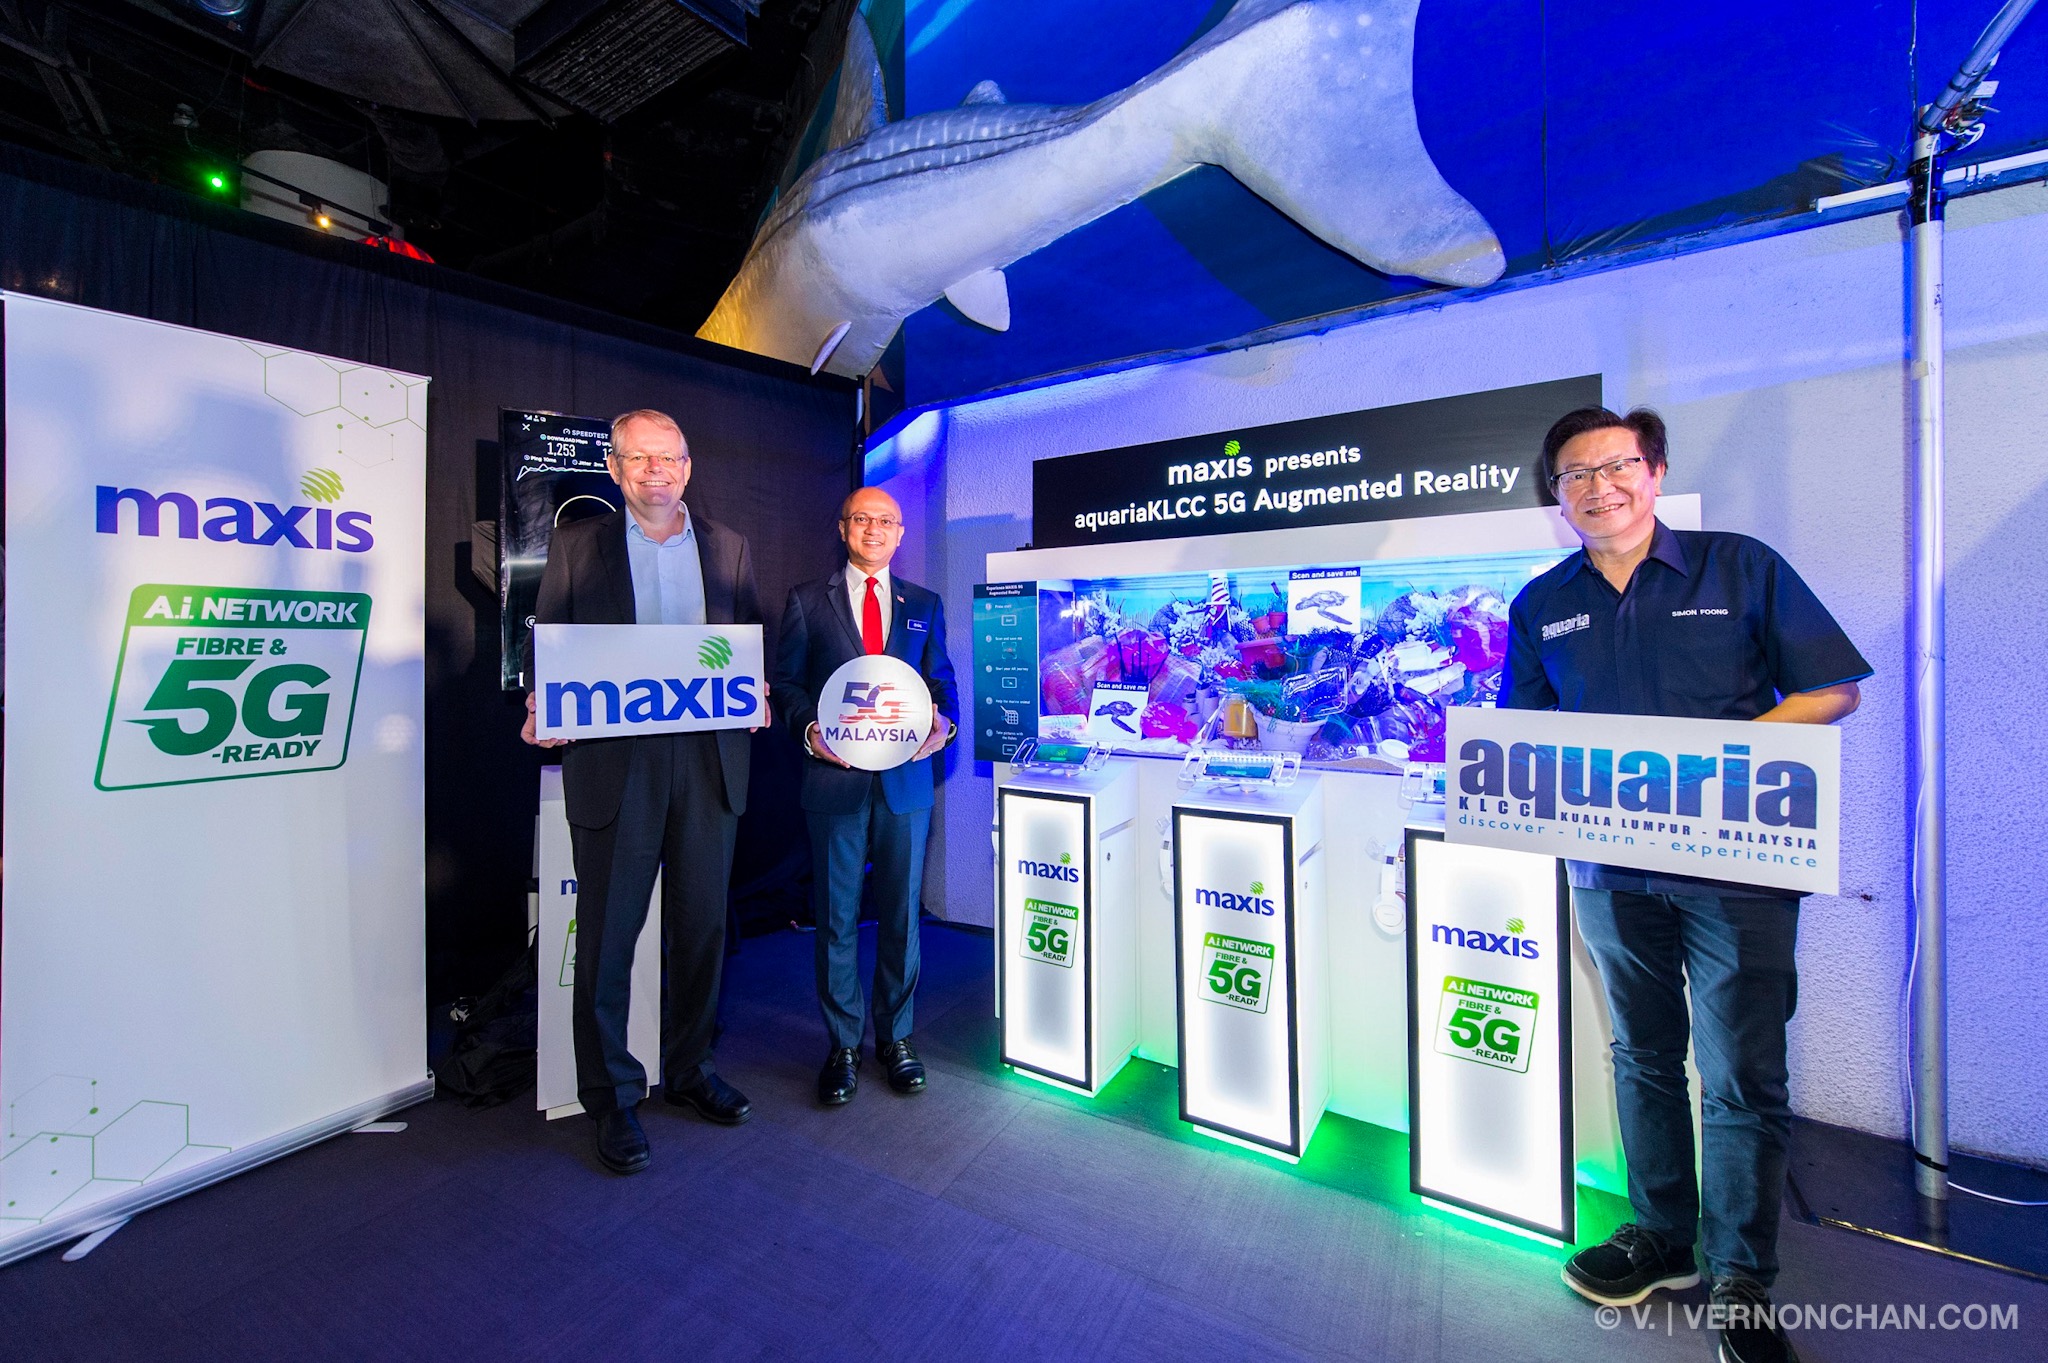 Maxis 5G aquariaKLCC Augmented Reality